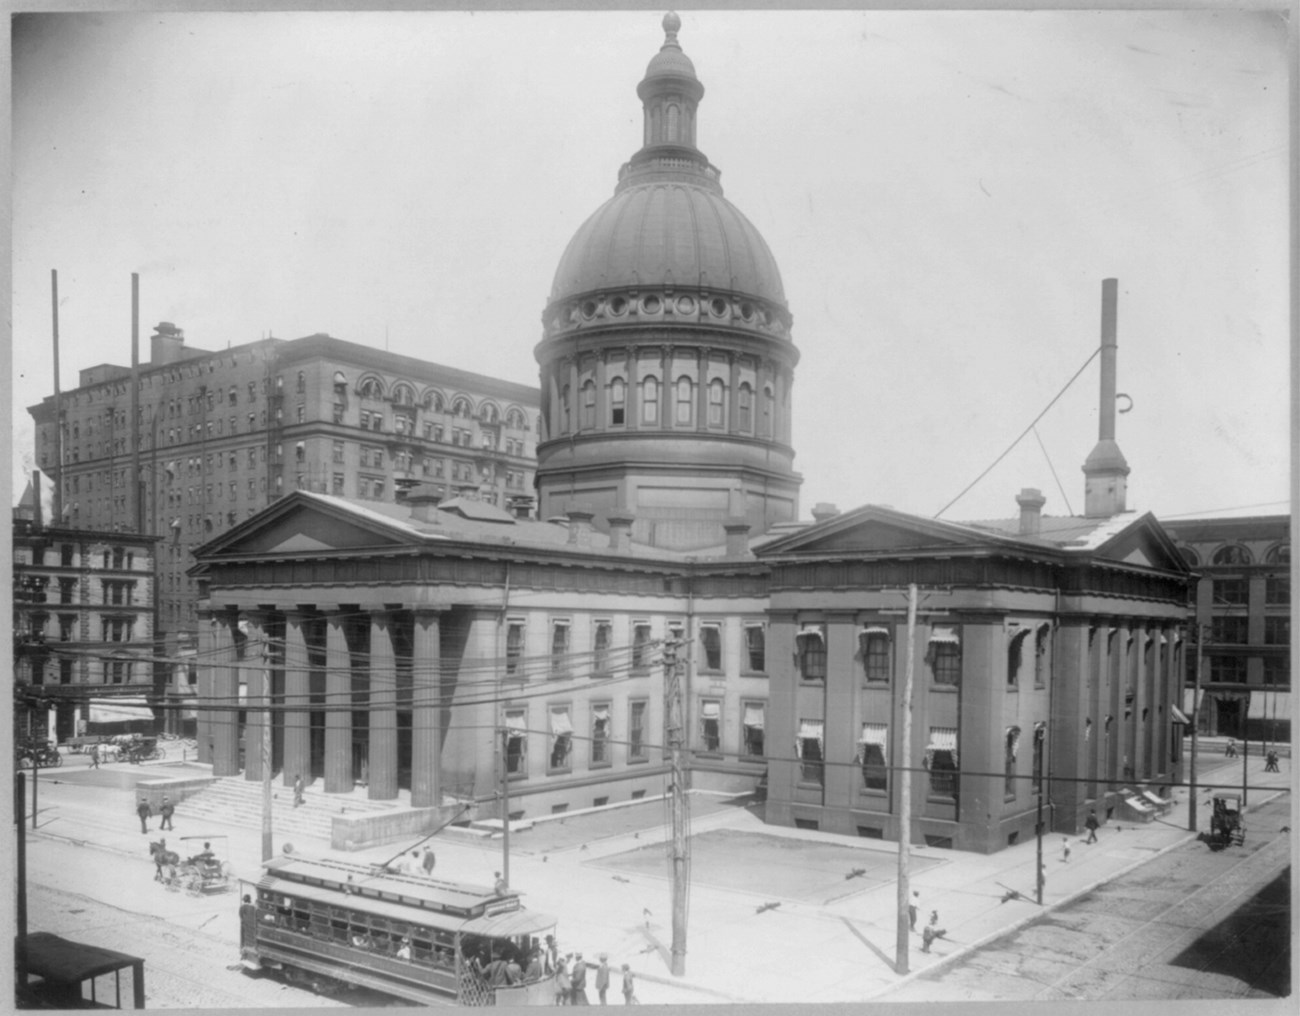 Exterior view of St. Louis Court House, St. Louis c. 1903